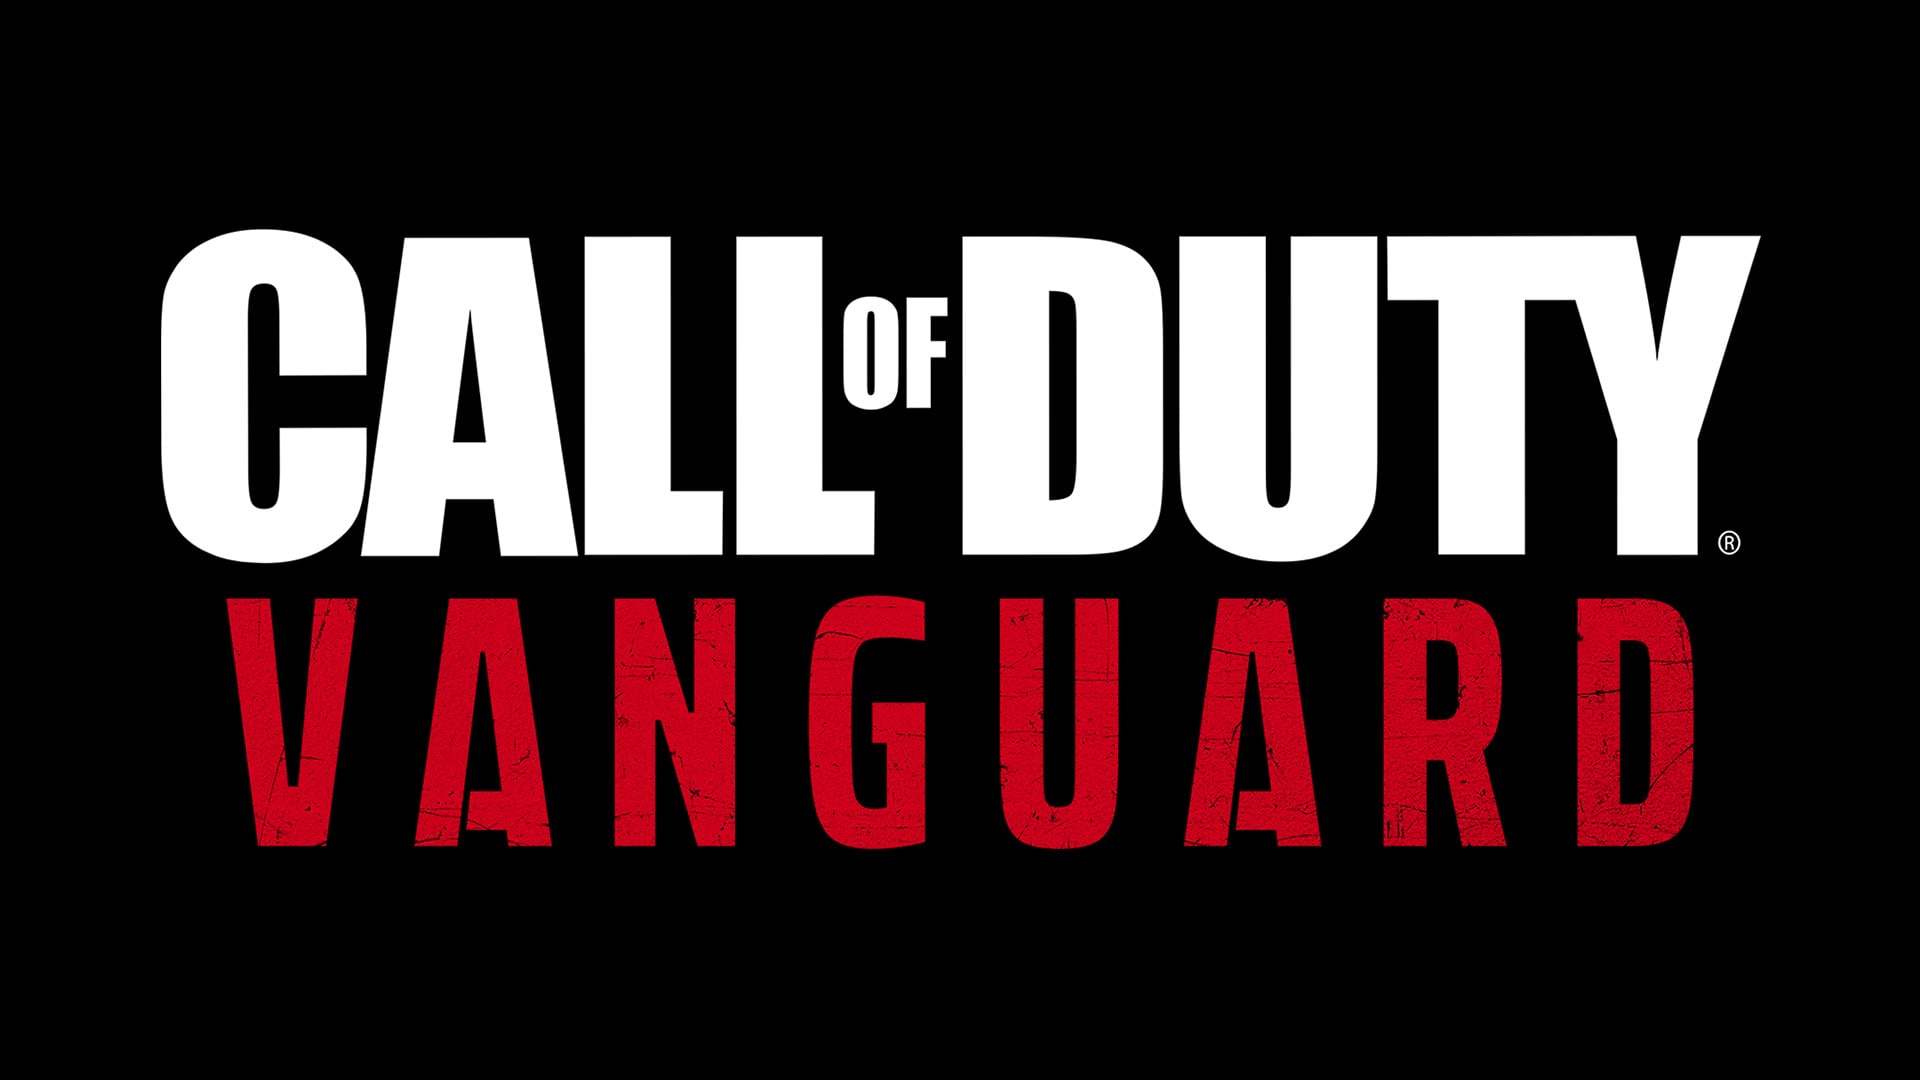 Call of Duty Vanguard logo on a dark background